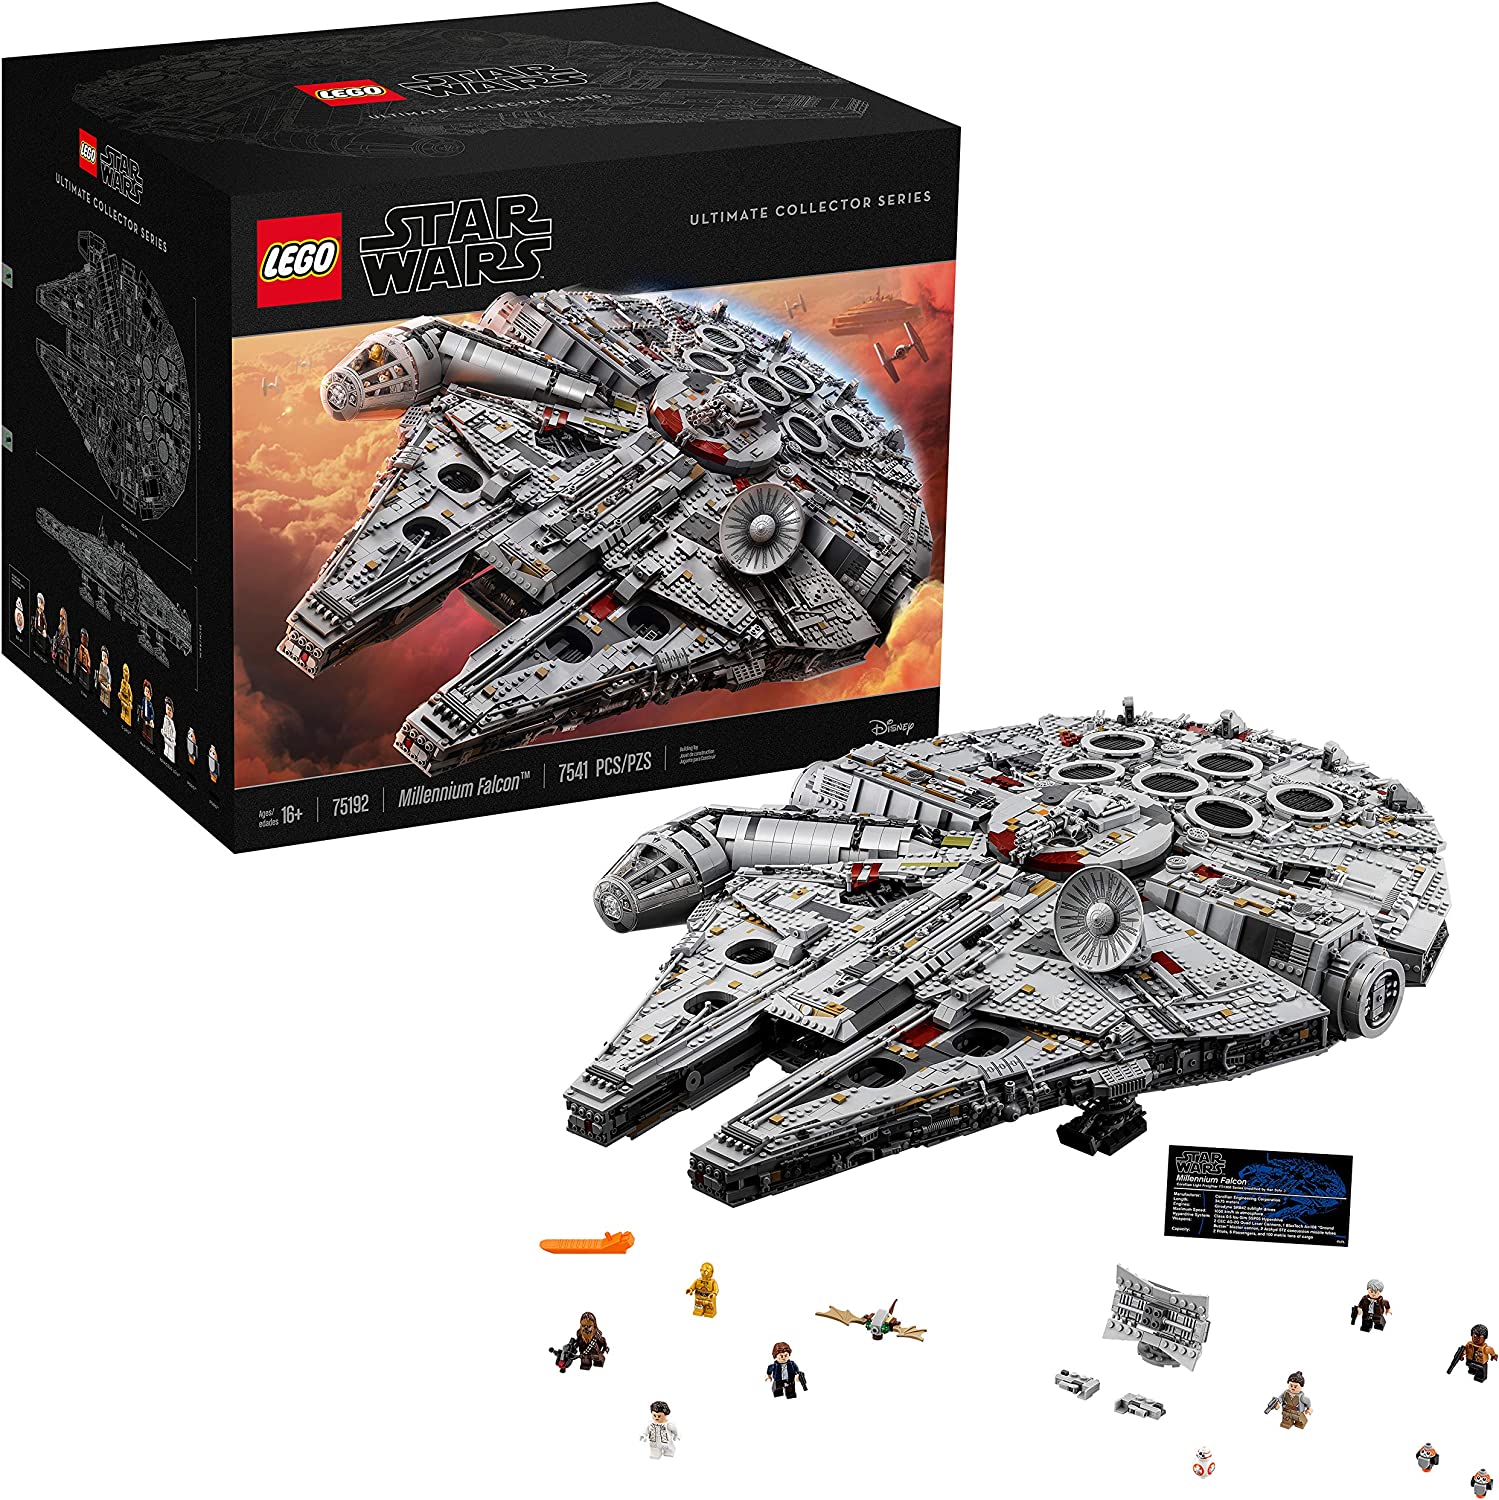 Juguete Lego Star Wars Ultimate Collection Series - Milennium Falcon